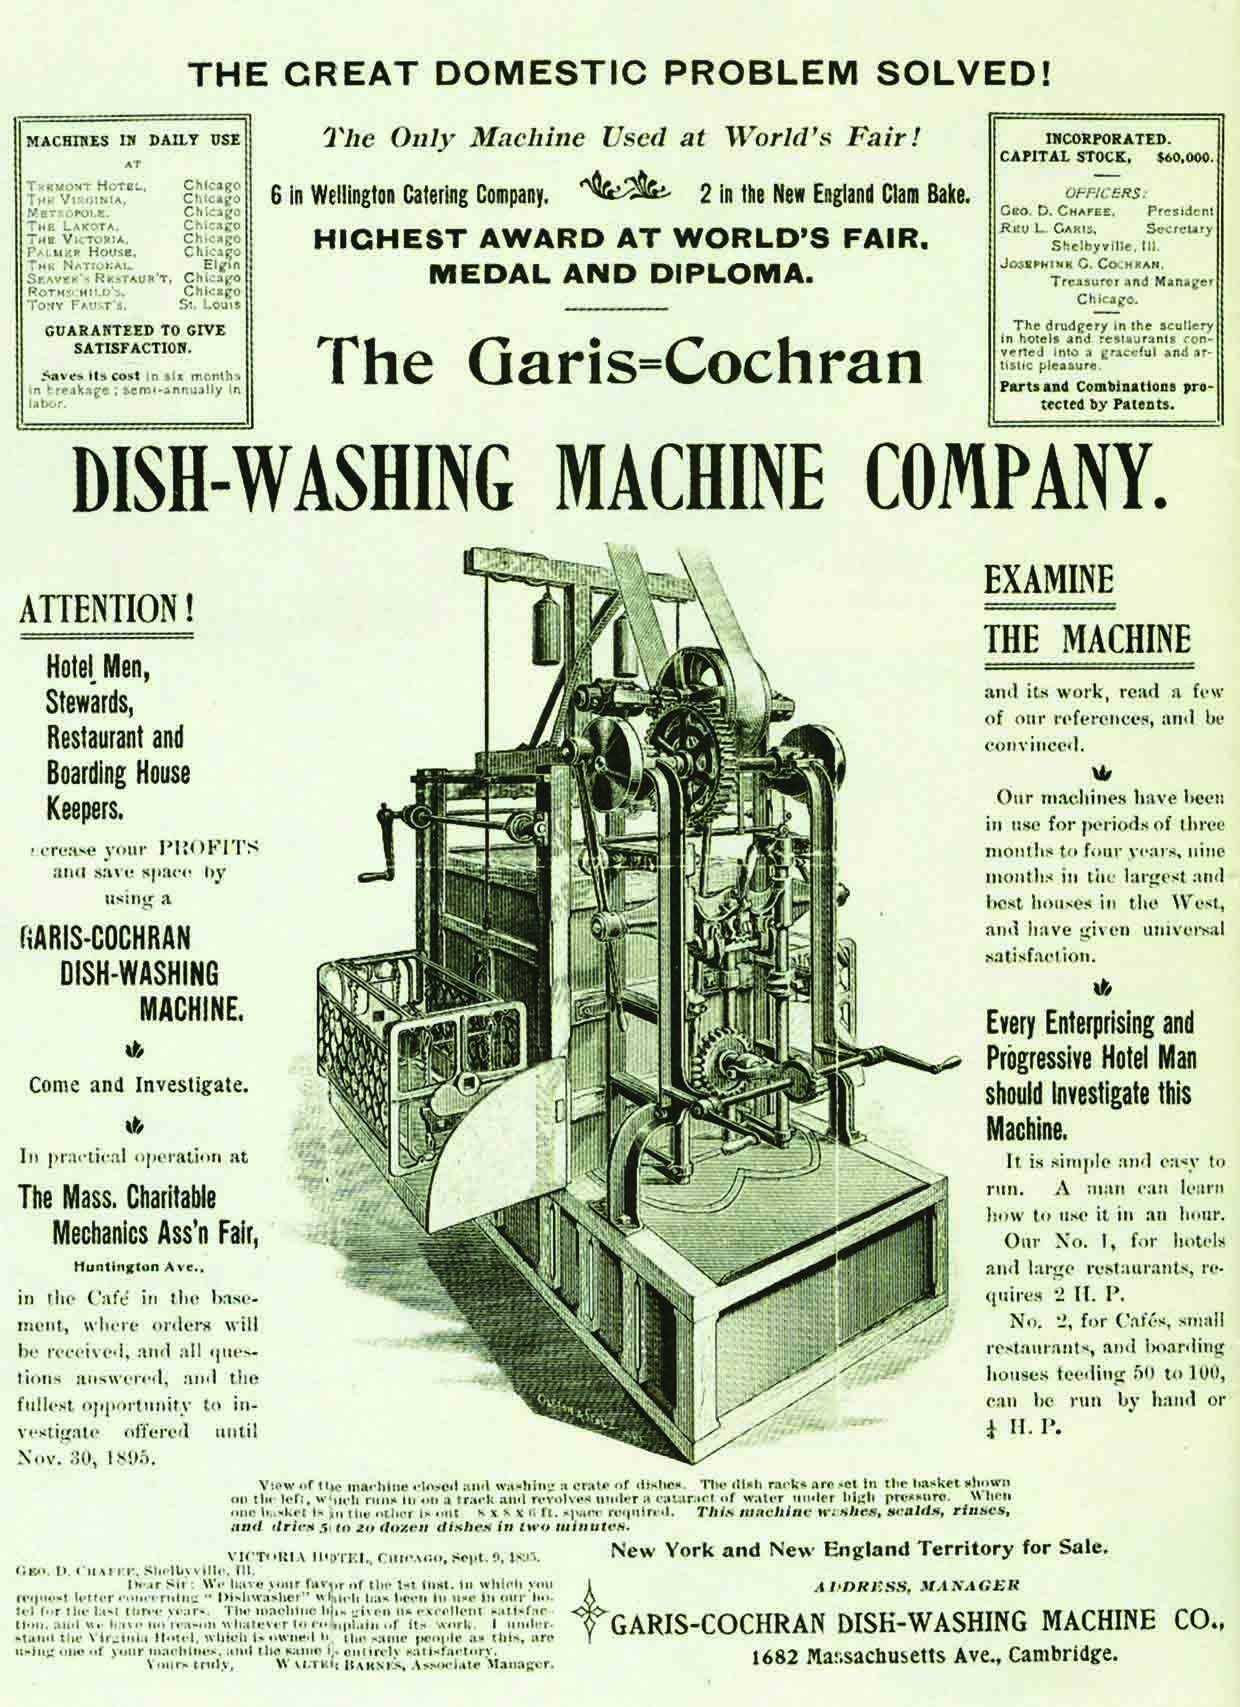 Newspaper ad for Garis-Cochran Dishwashing Machine